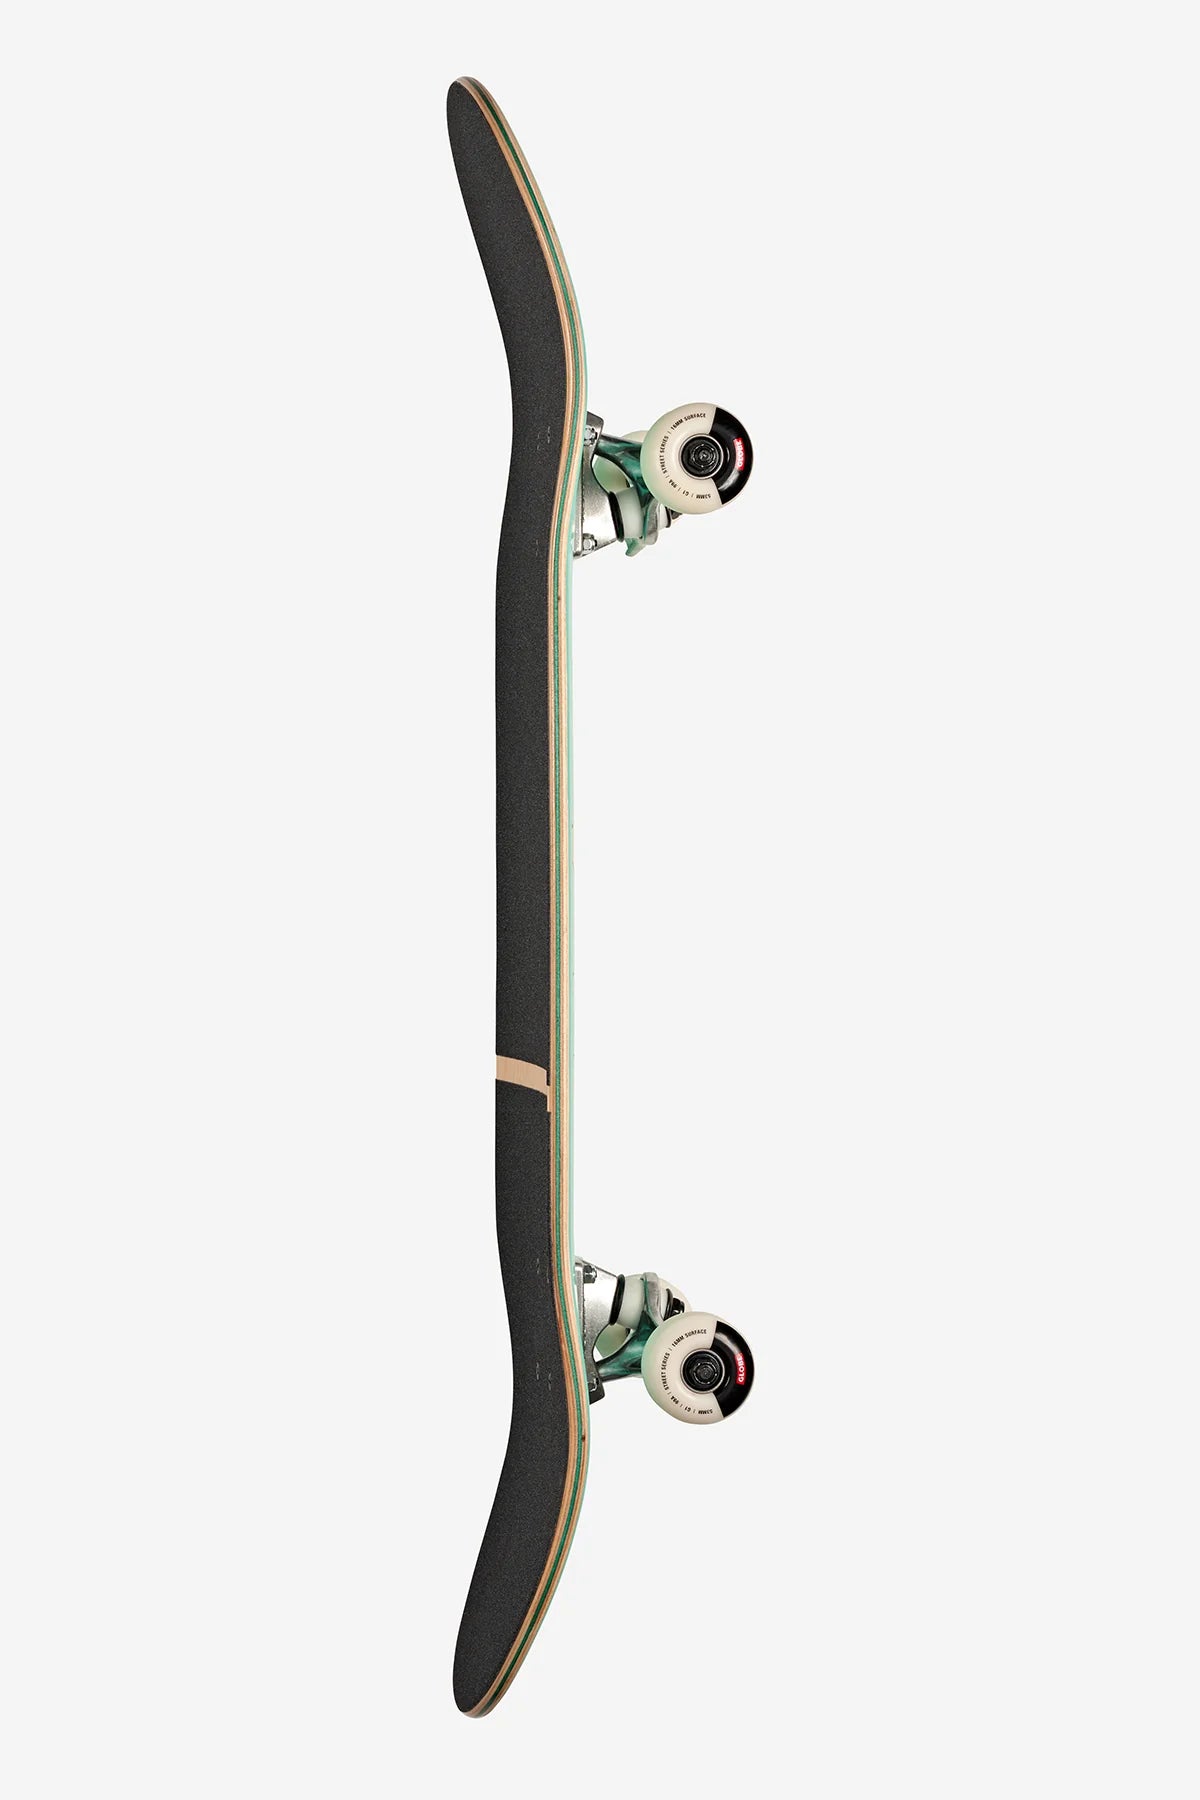 Skateboard Globe G1 Digital Nurture 8.25" Complete Synthetic Beauty / Jual Globe Skateboard Fullset